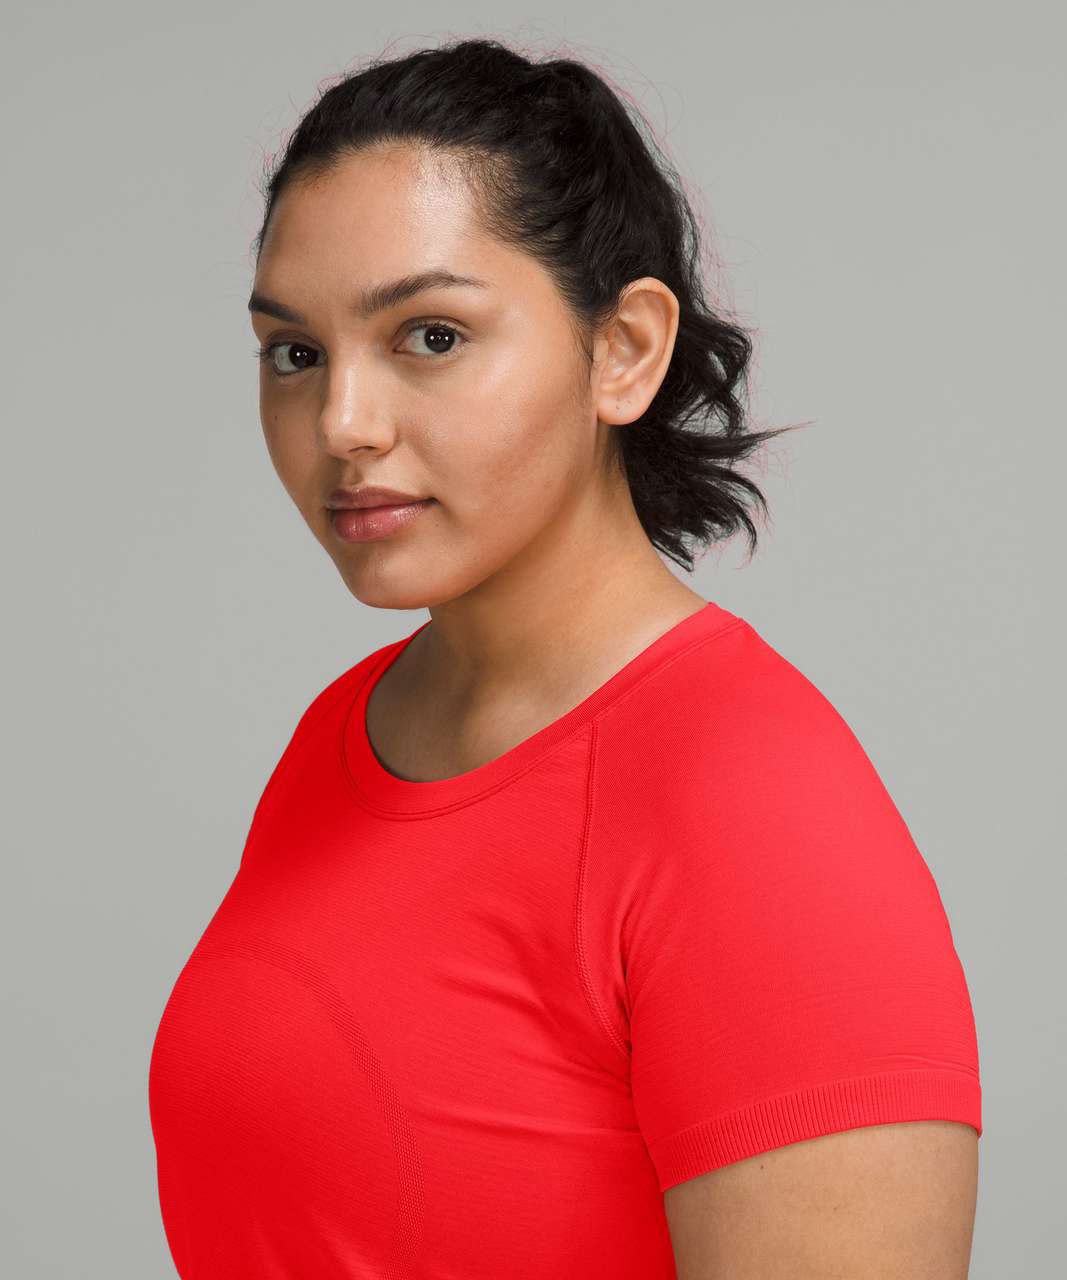 Lululemon Swiftly Tech Short Sleeve Shirt 2.0 - Love Red / Love